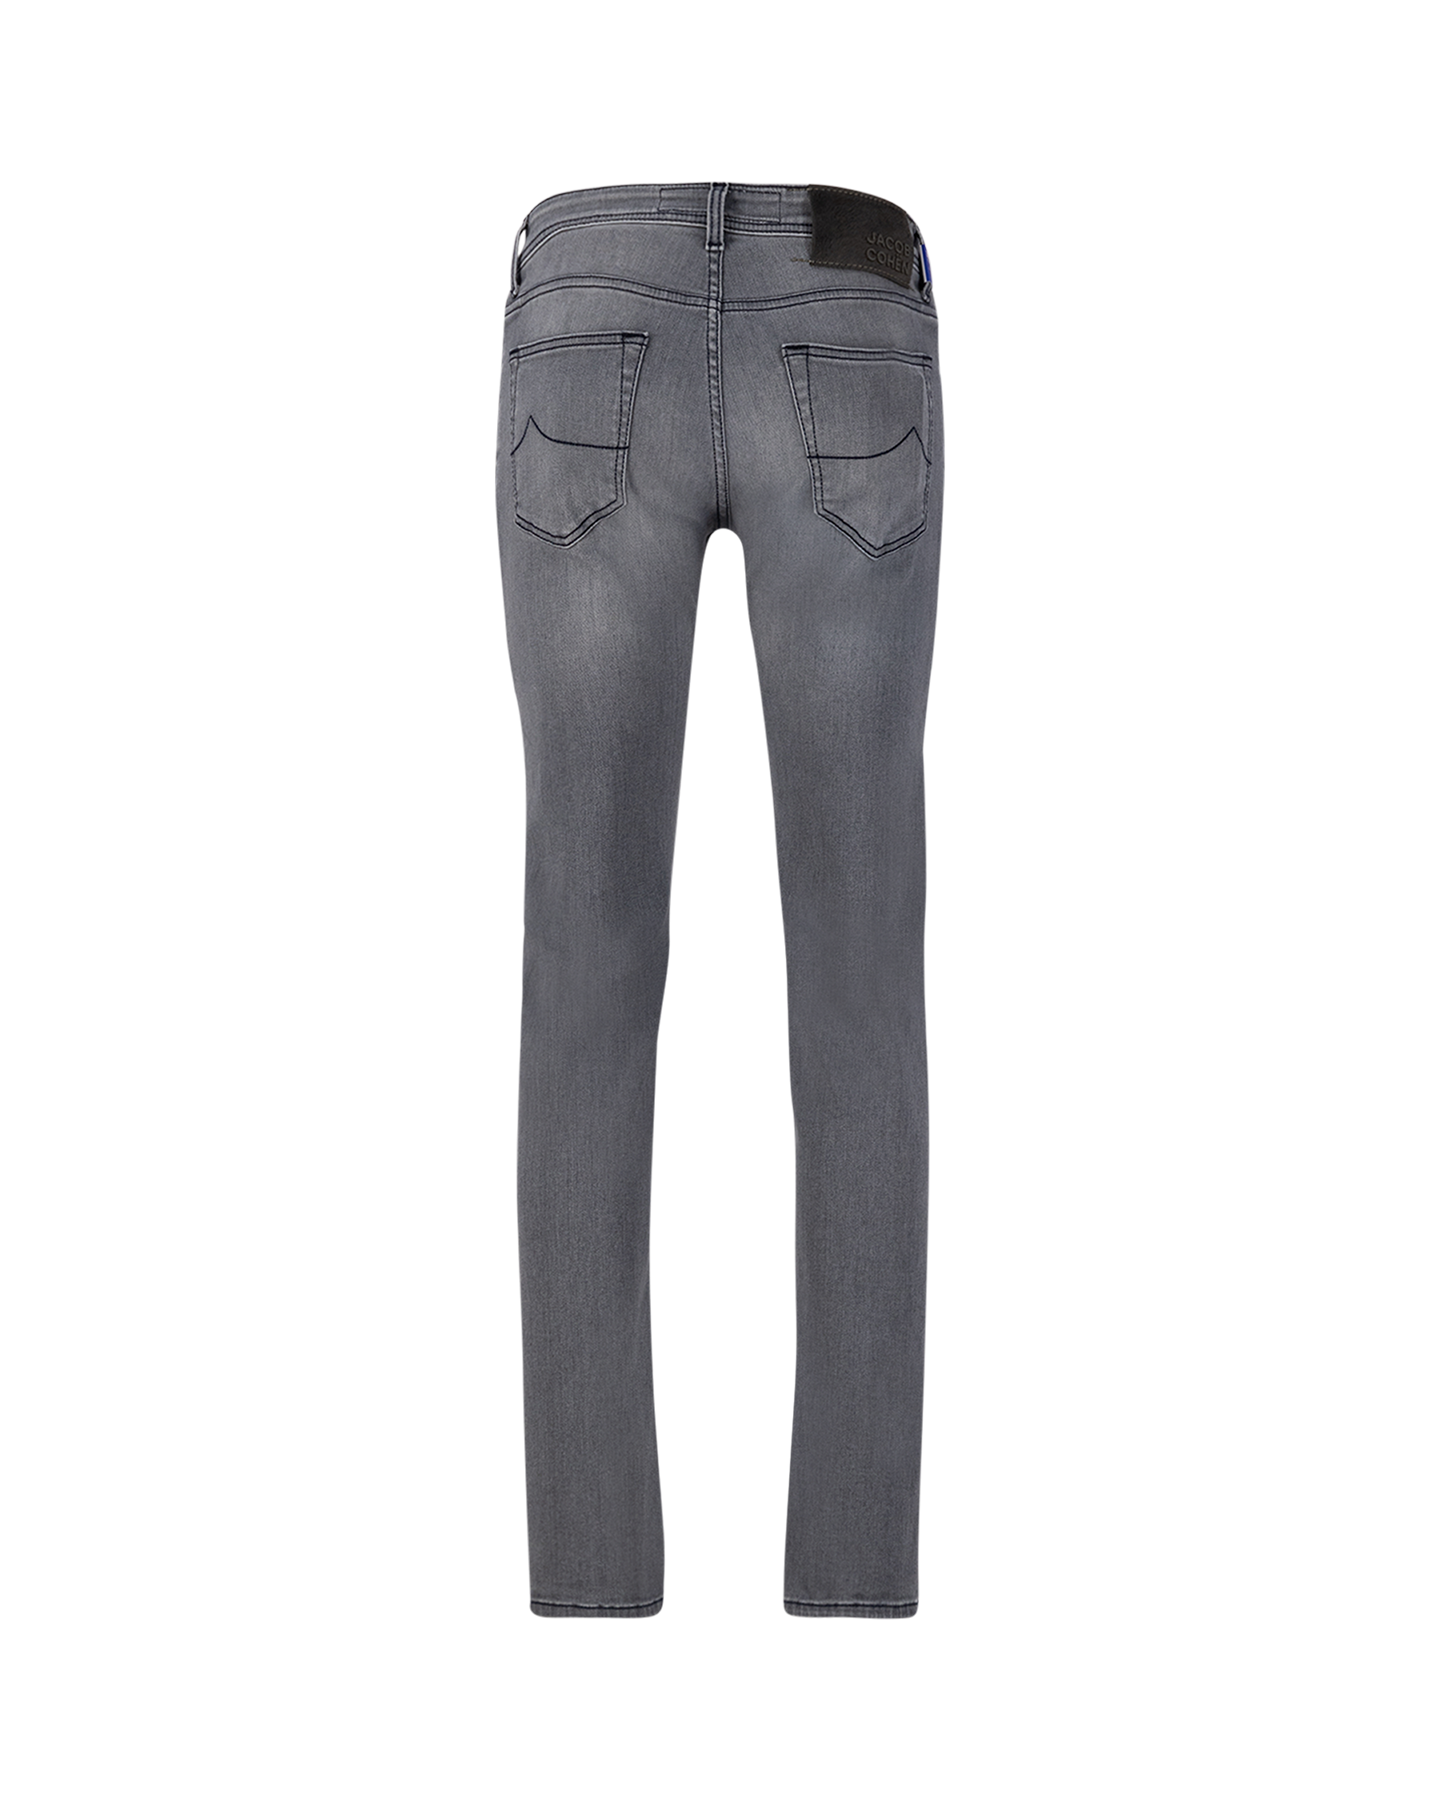 Jacob Cohen Nick Slim Mid-Light Grey Jeans 746D DENIM 2